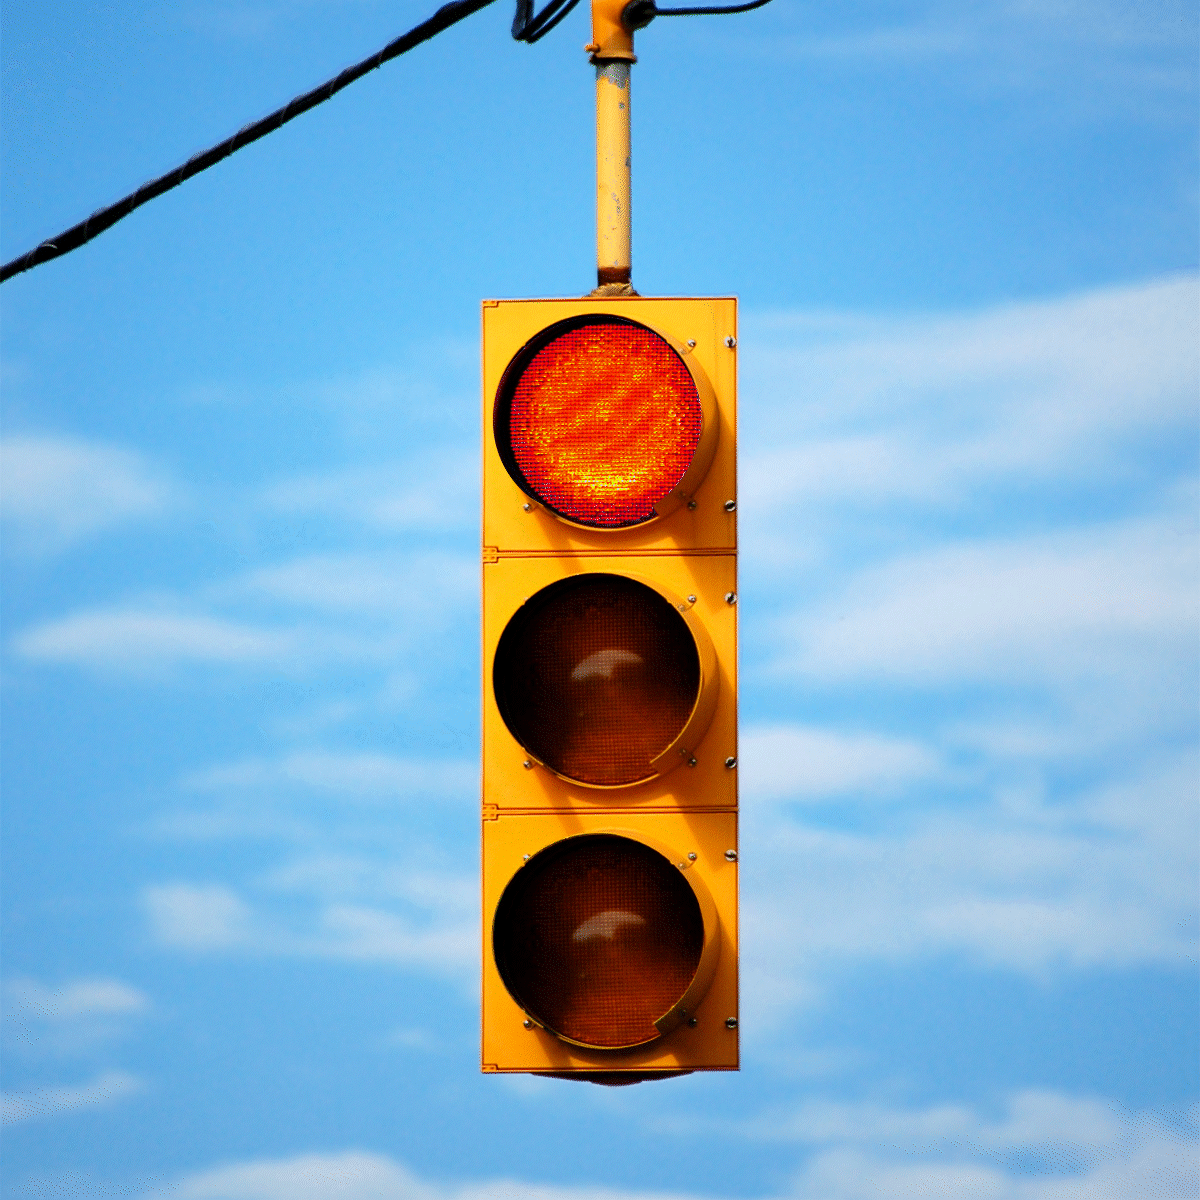 green stop light